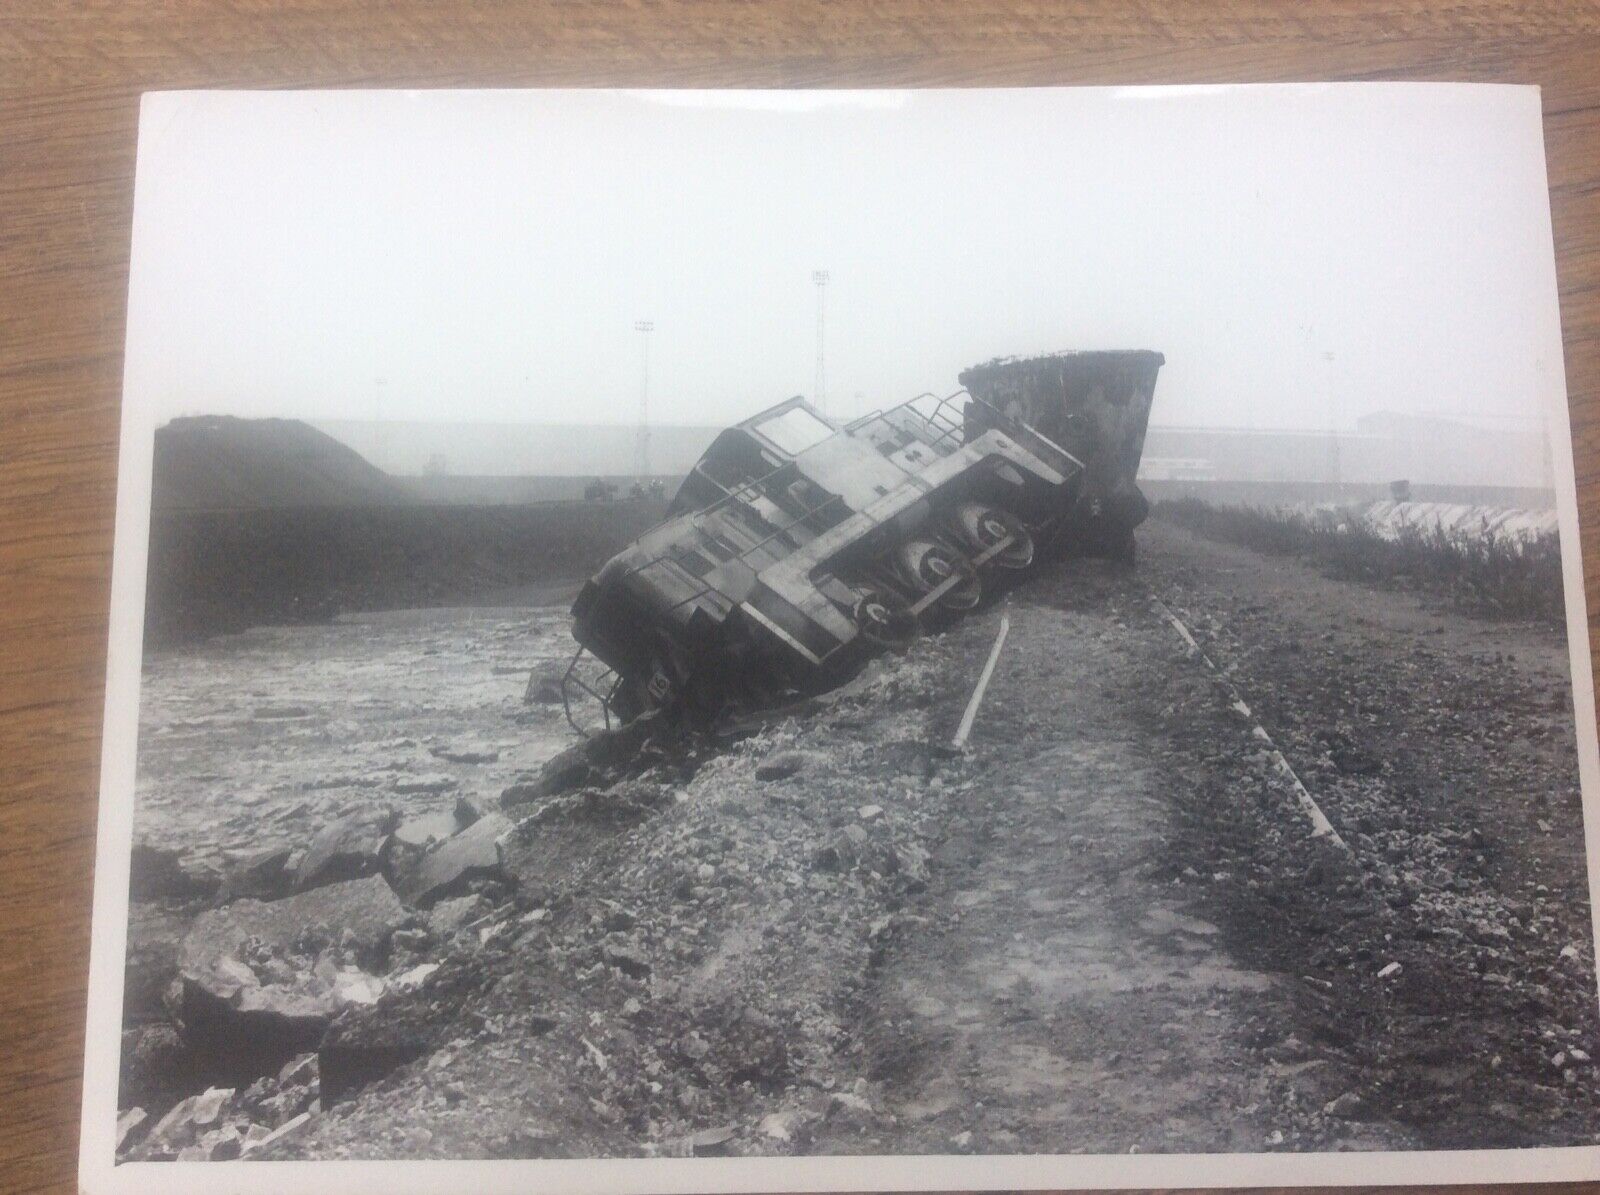 Scunthorpe British Steel Photograph Print Rail Accident Railway Rail Loco 8x6”